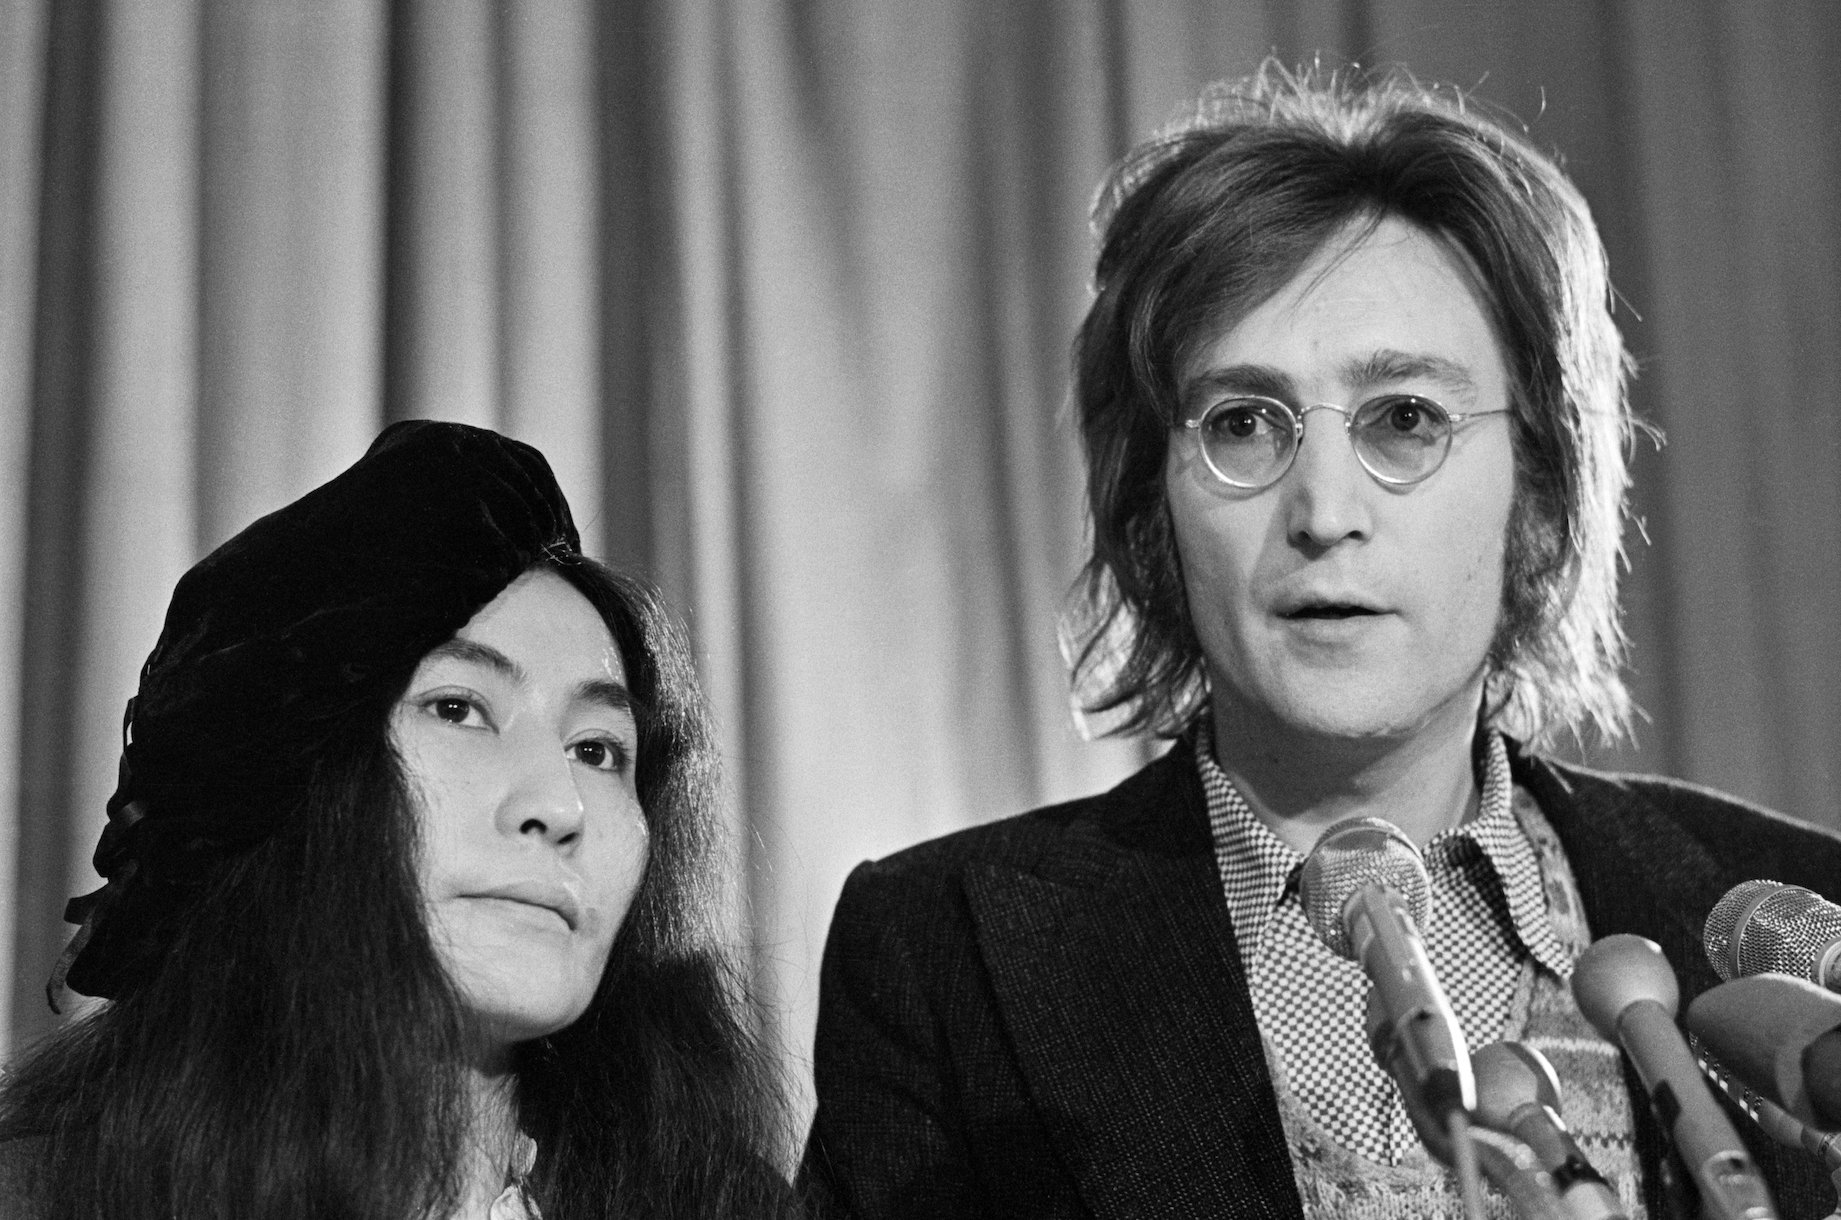 Yoko Ono and John Lennon at a press conference in Washington, DC